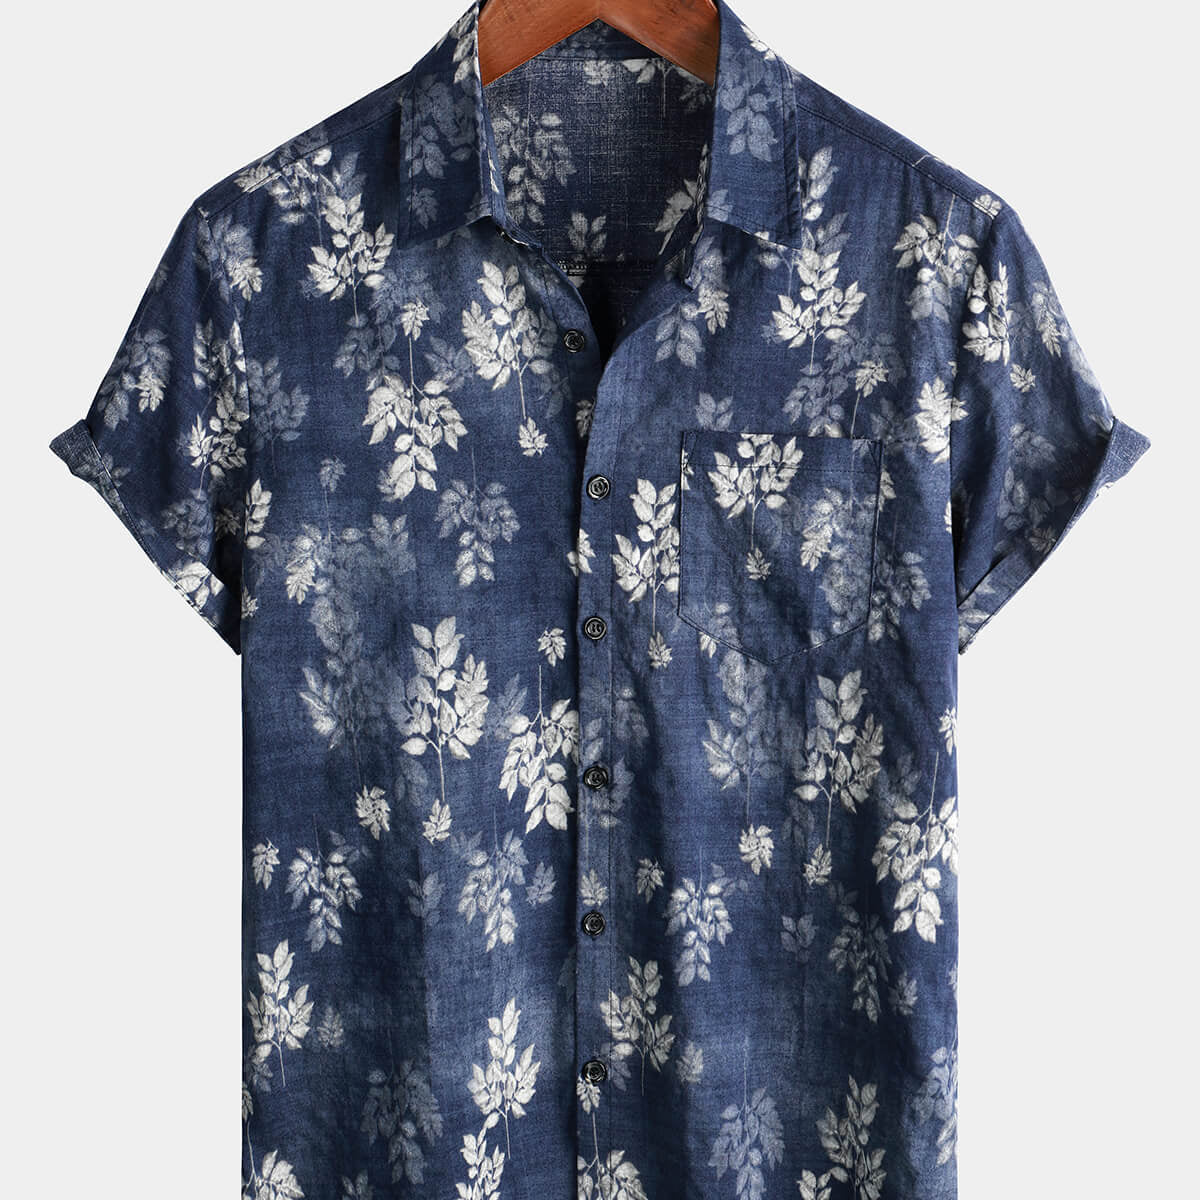 Men's Cotton Pocket Vintage Short Sleeve 70s Retro Summer Navy Blue Button Up Hawaiian Shirt